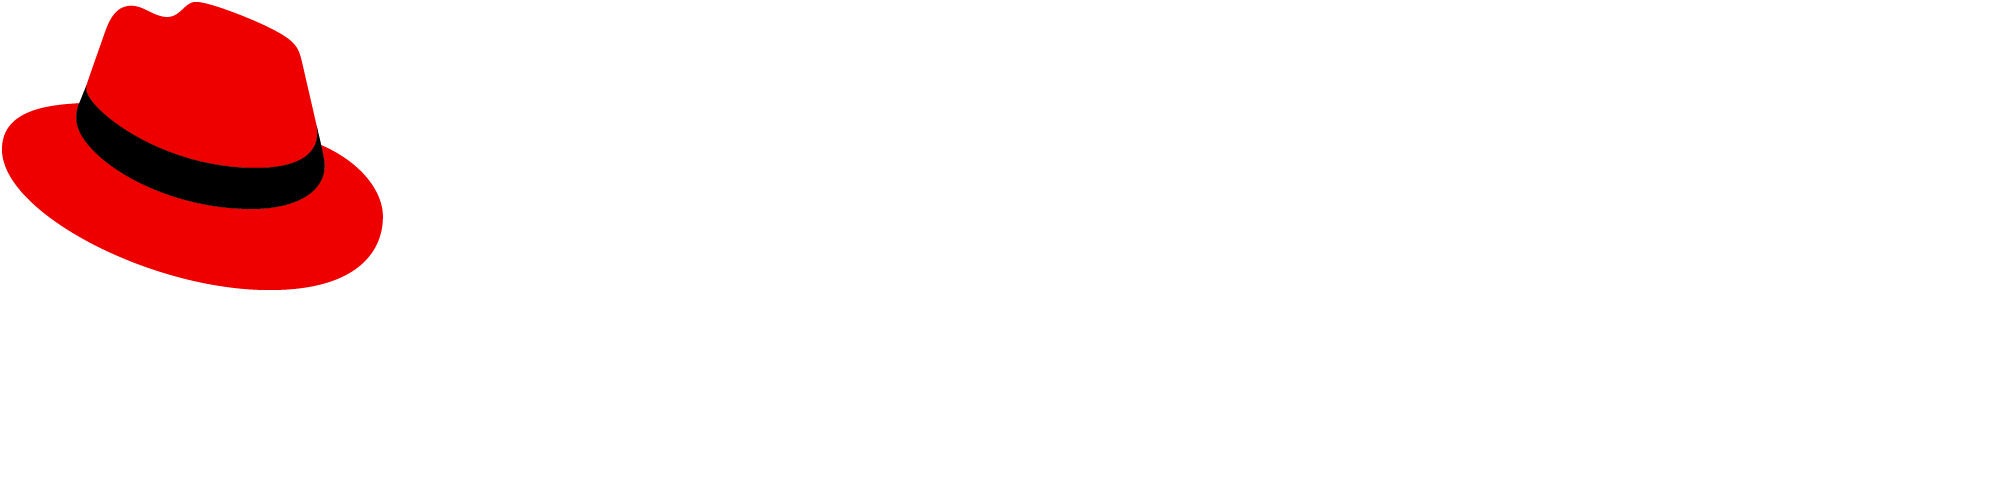 Red_Hat-Enterprise_Linux-